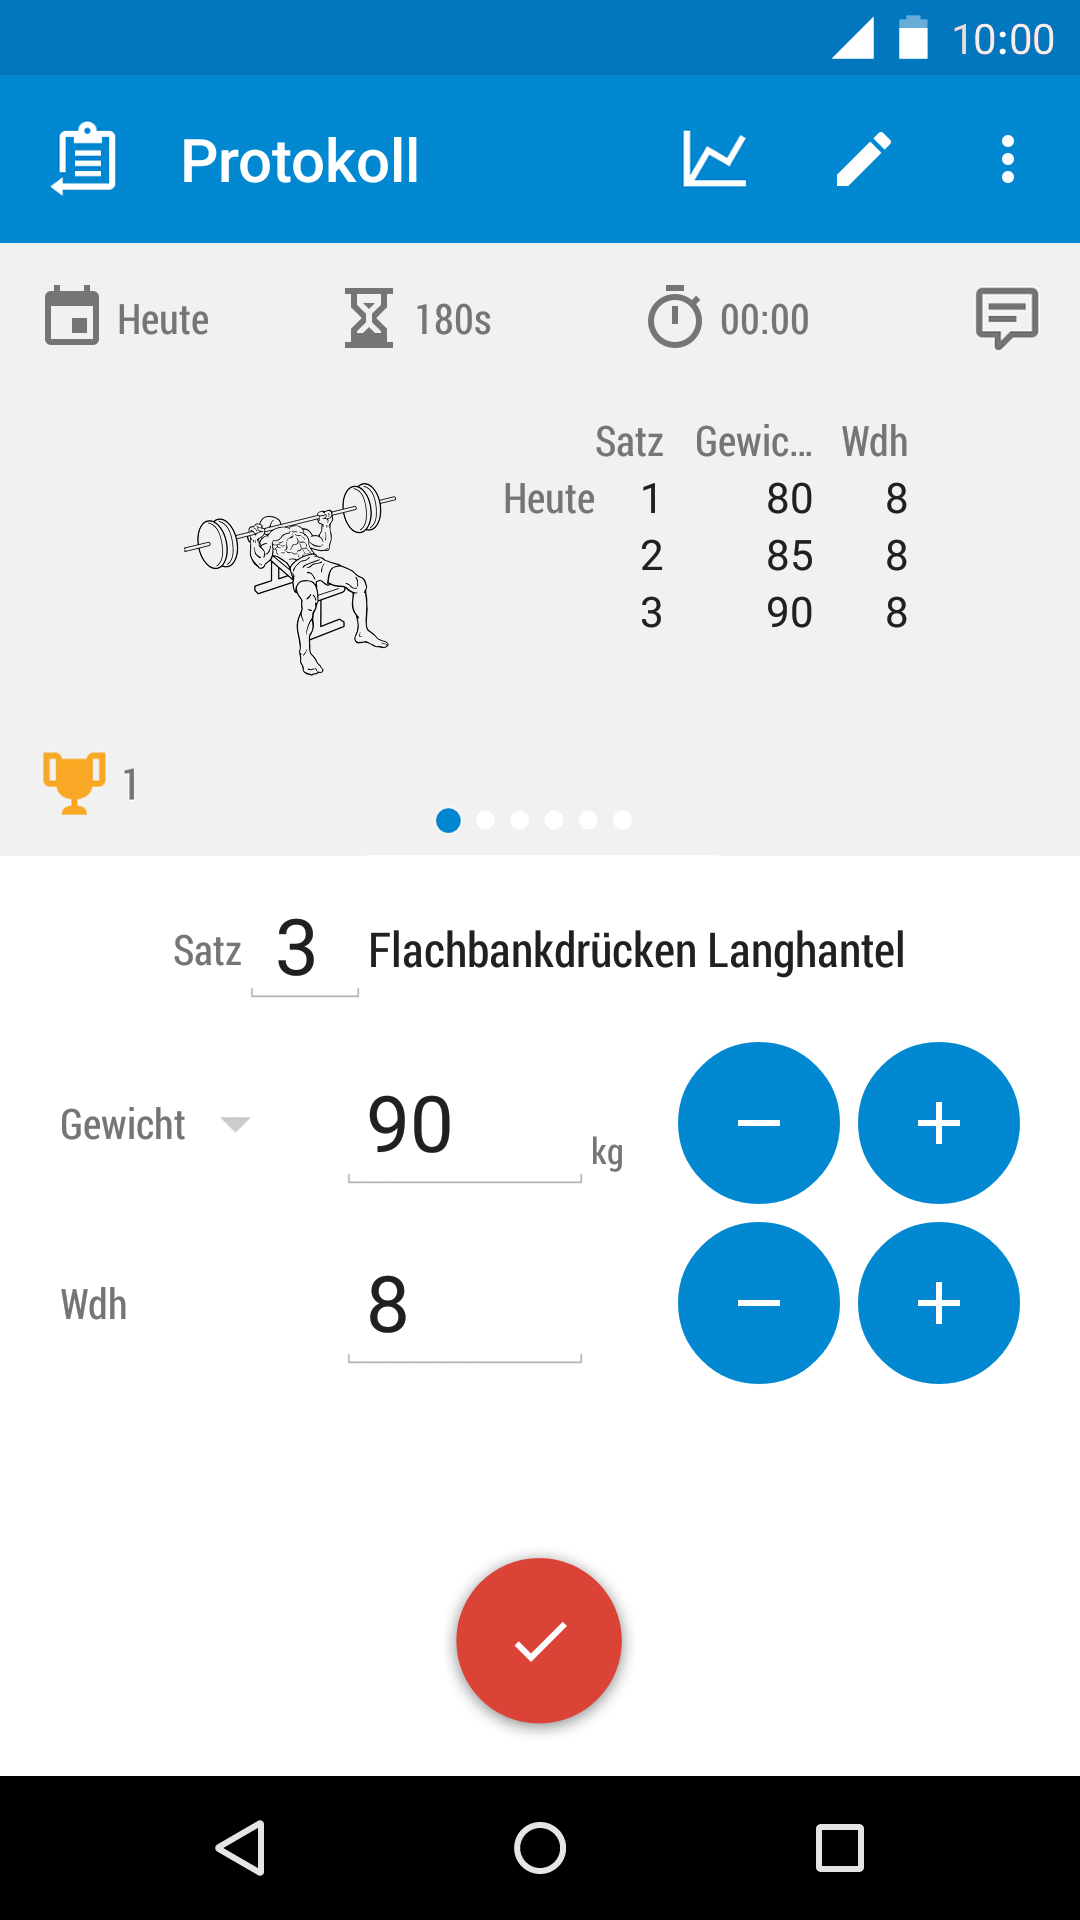 Android application Workout Tracker & Gym Plan Log screenshort